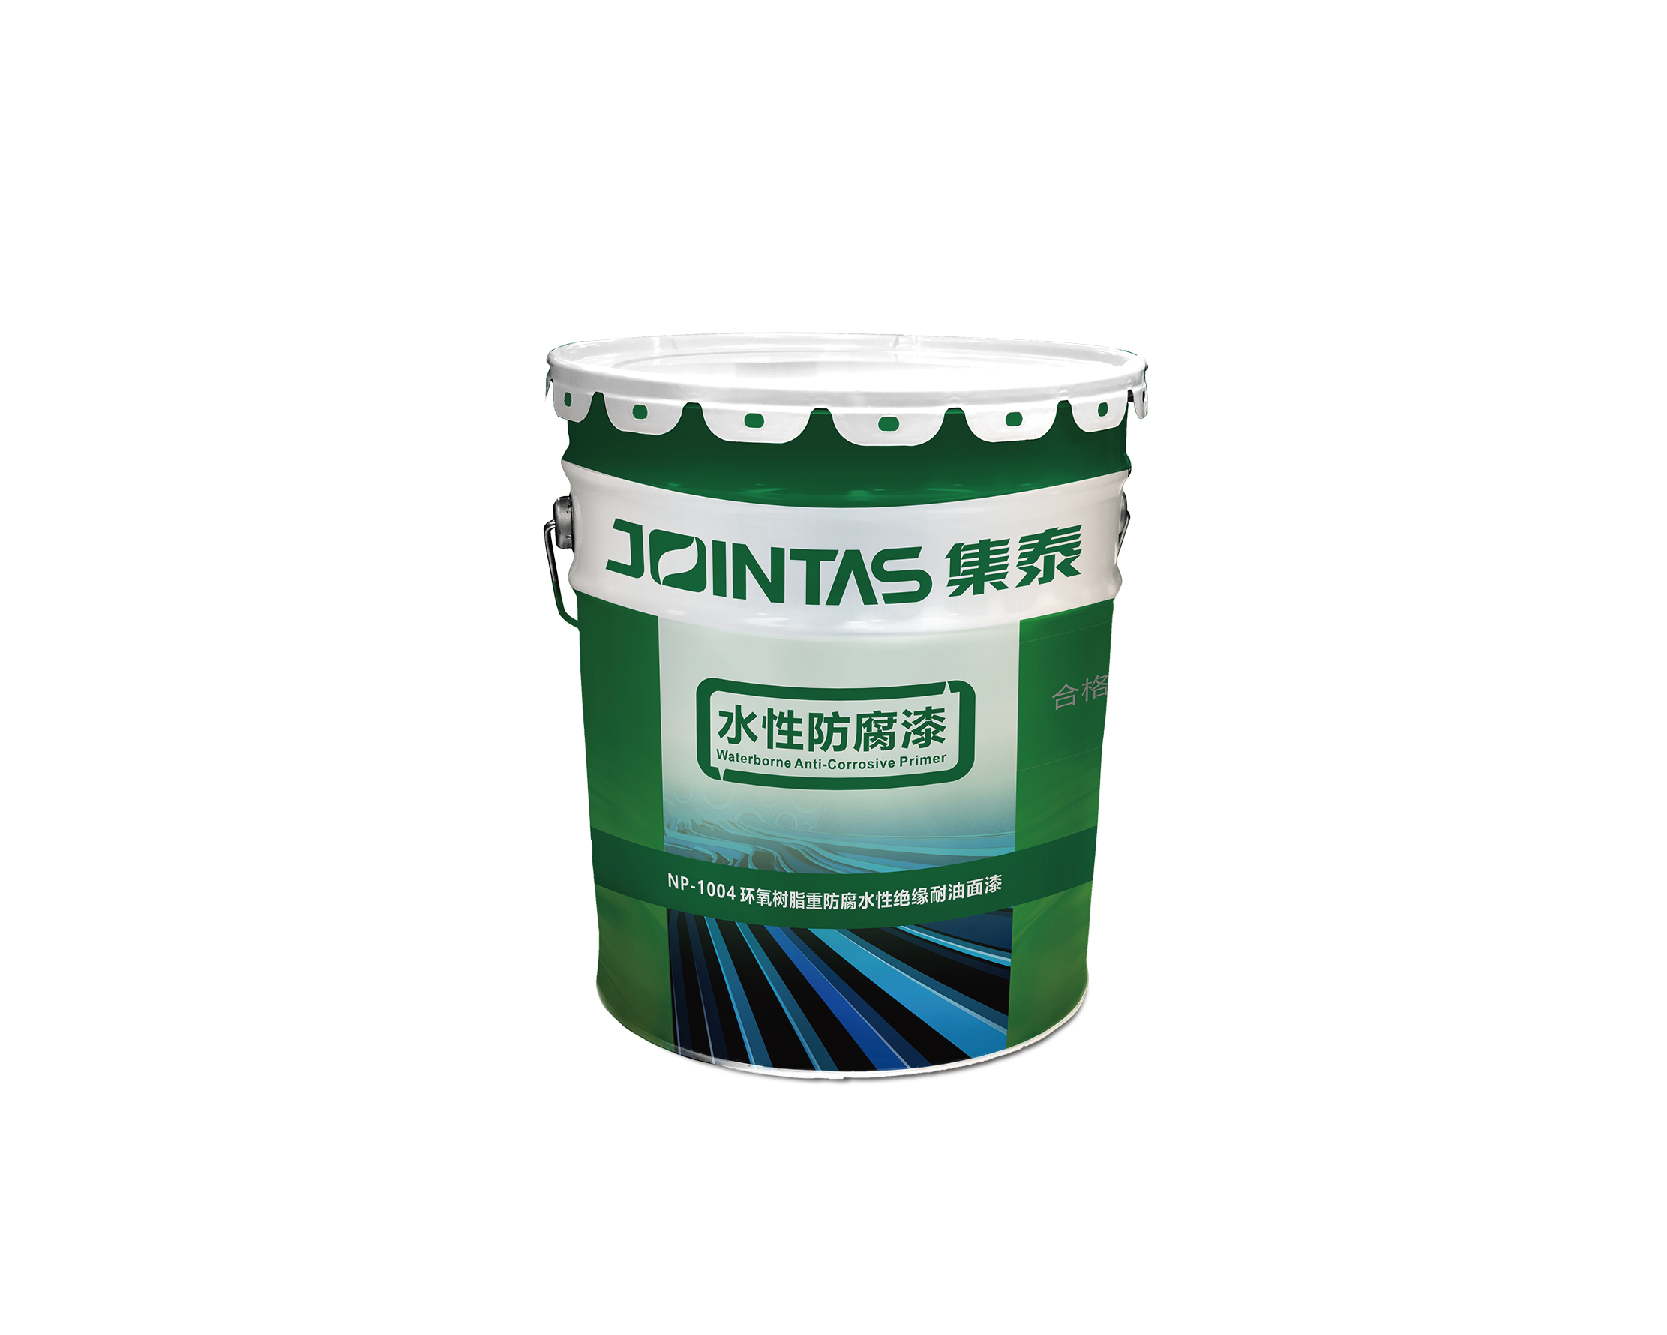  NP-1004 环氧树脂重防腐水性绝缘耐油面漆